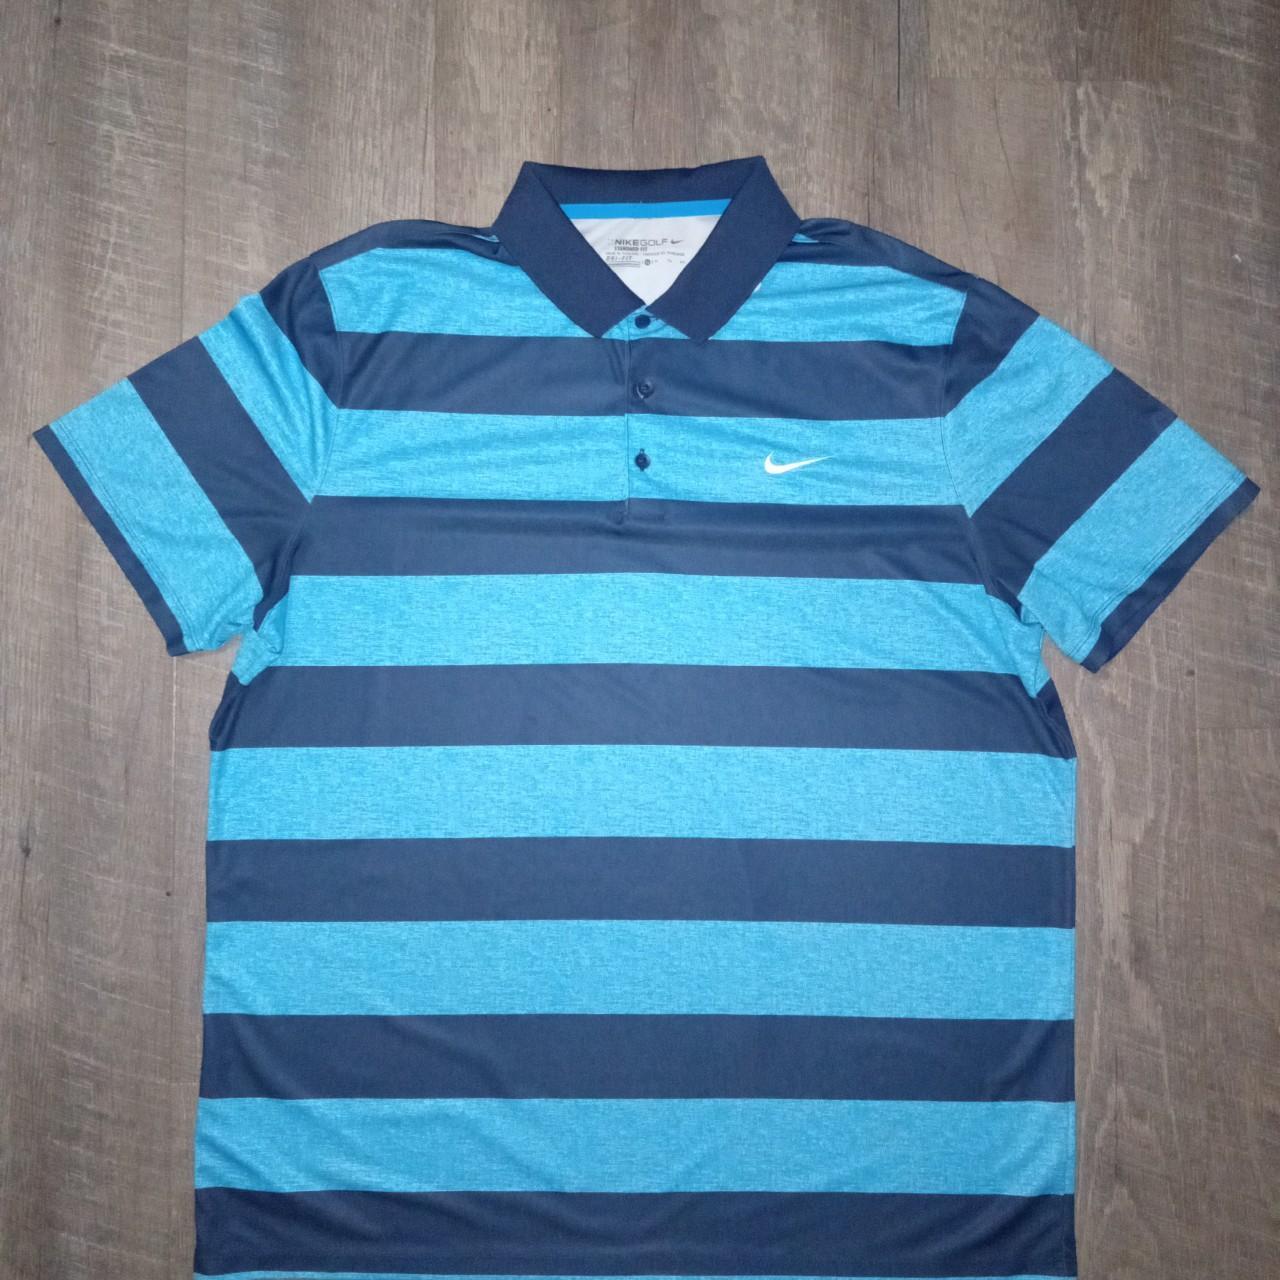 Nike Men's Shirt - Blue - XL